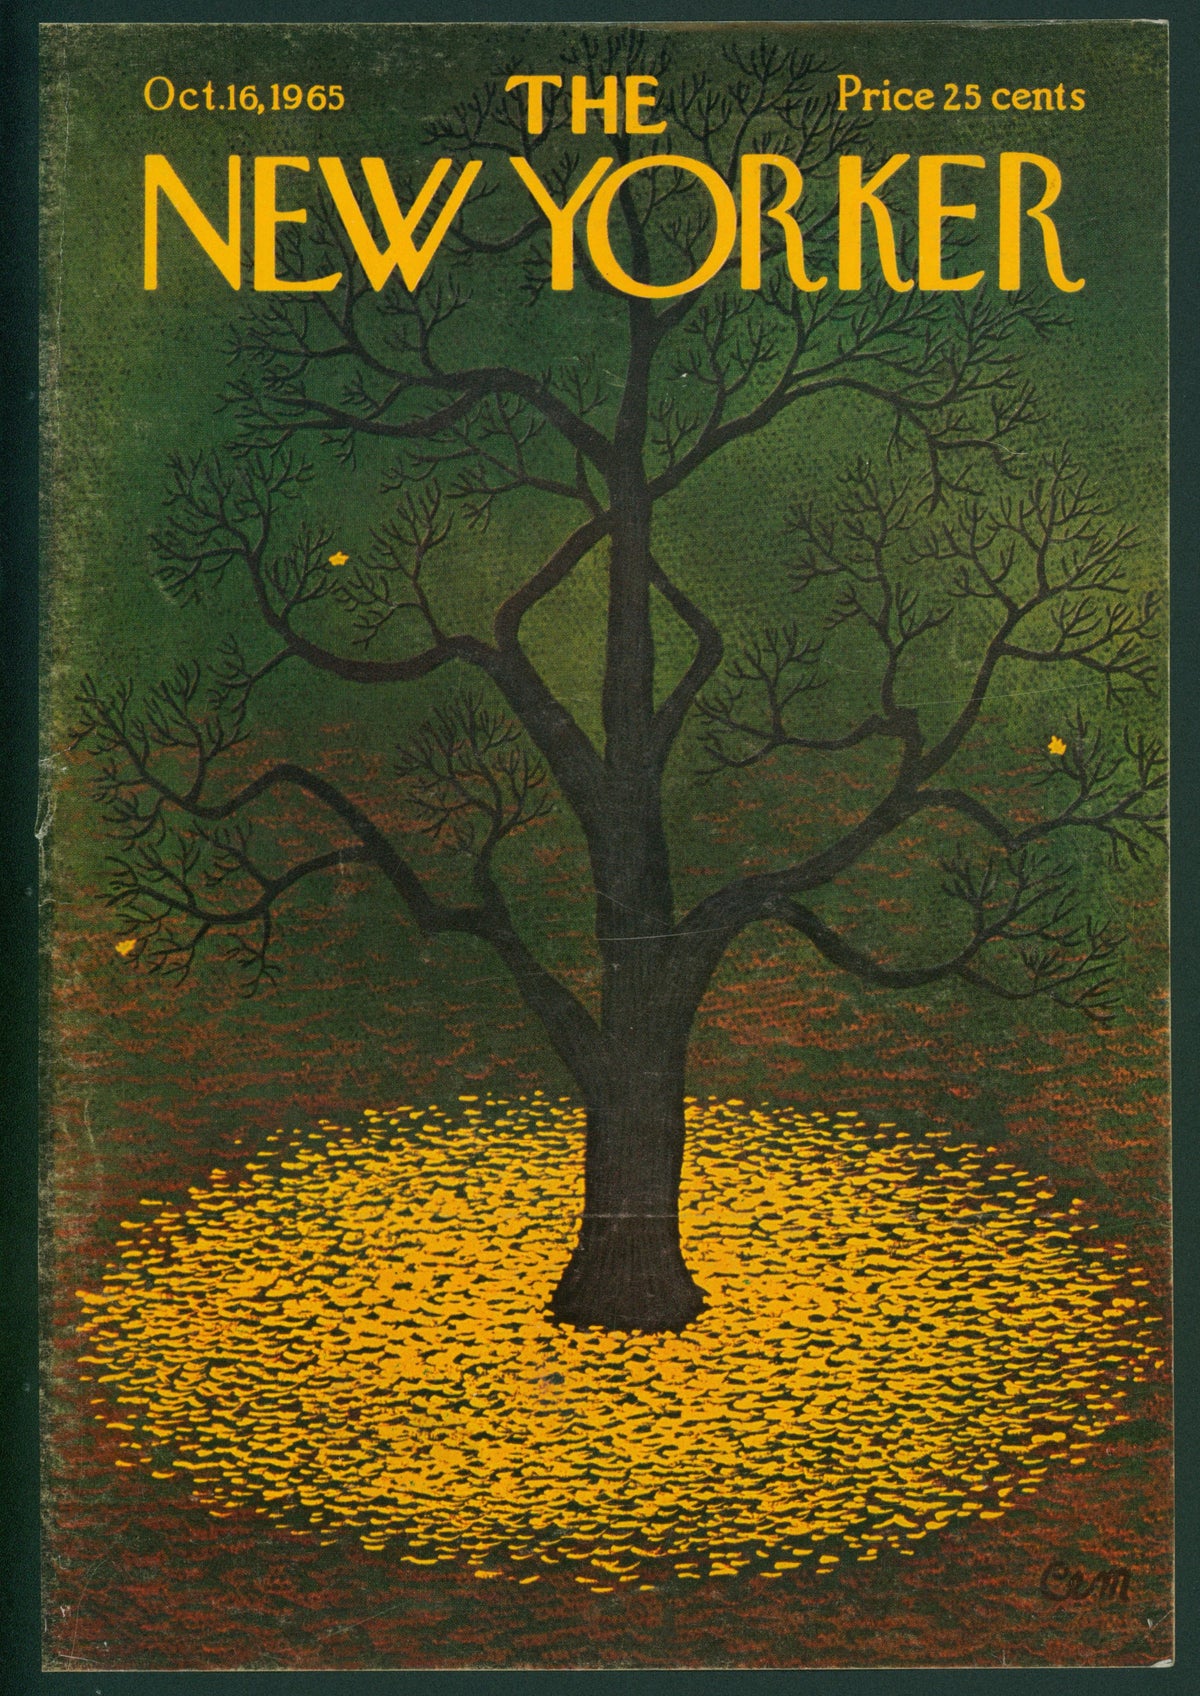 Autumn Gold-The New Yorker - Authentic Vintage Antique Print